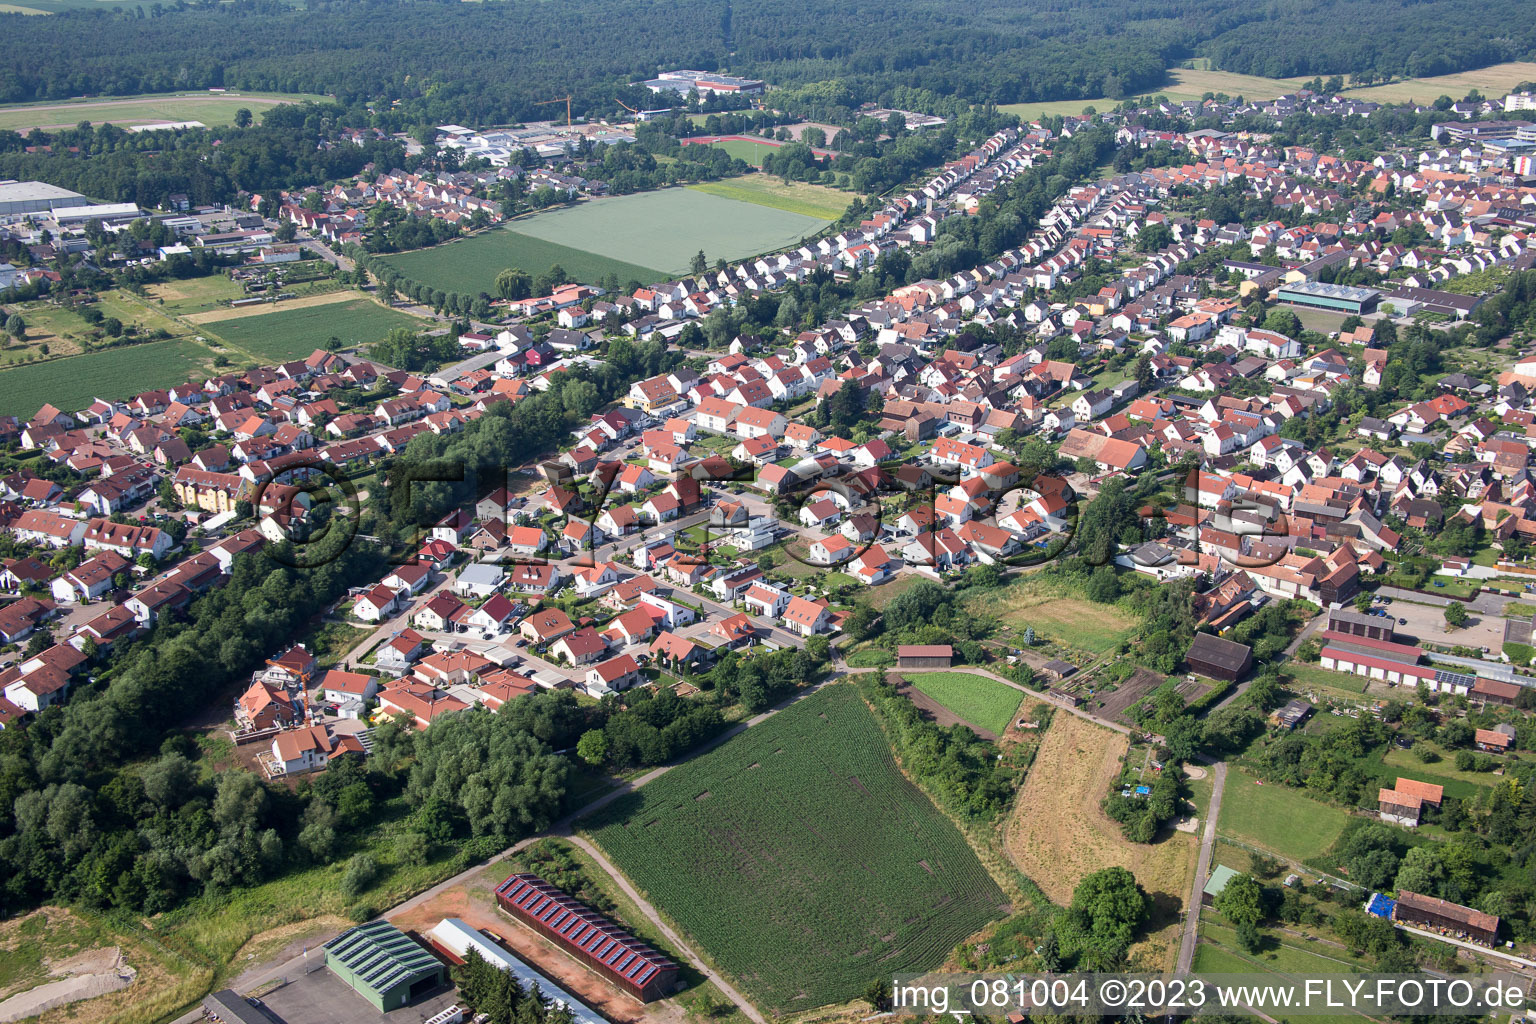 District Herxheim in Herxheim bei Landau/Pfalz in the state Rhineland-Palatinate, Germany from the plane